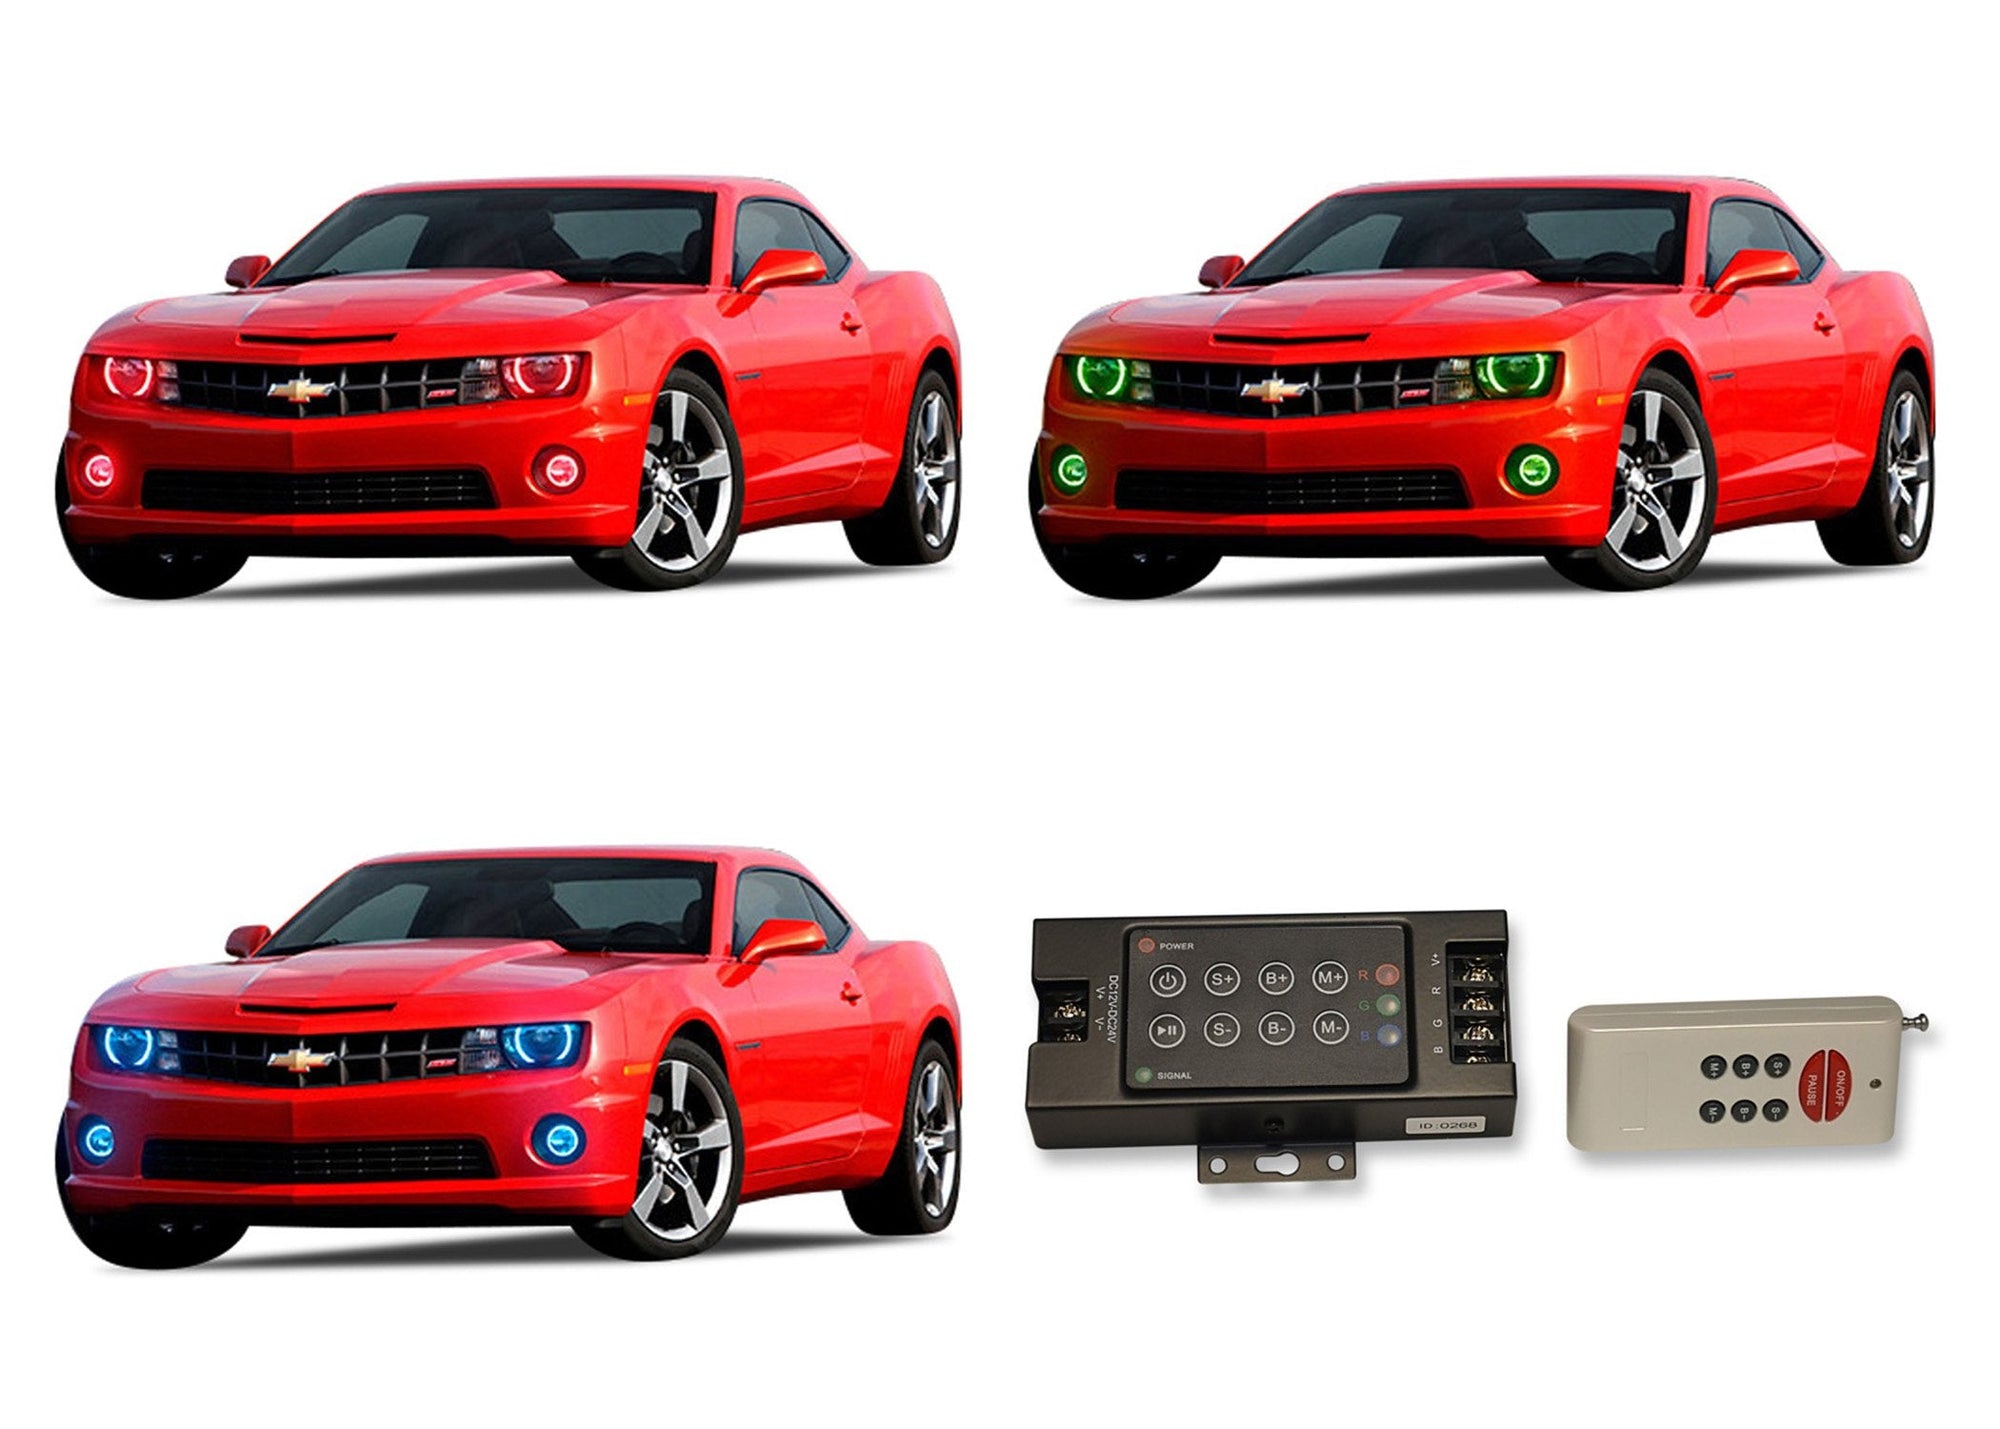 Chevrolet-Camaro-2010, 2011, 2012, 2013-LED-Halo-Headlights and Fog Lights-RGB-RF Remote-CY-CARS1013-V3HFRF